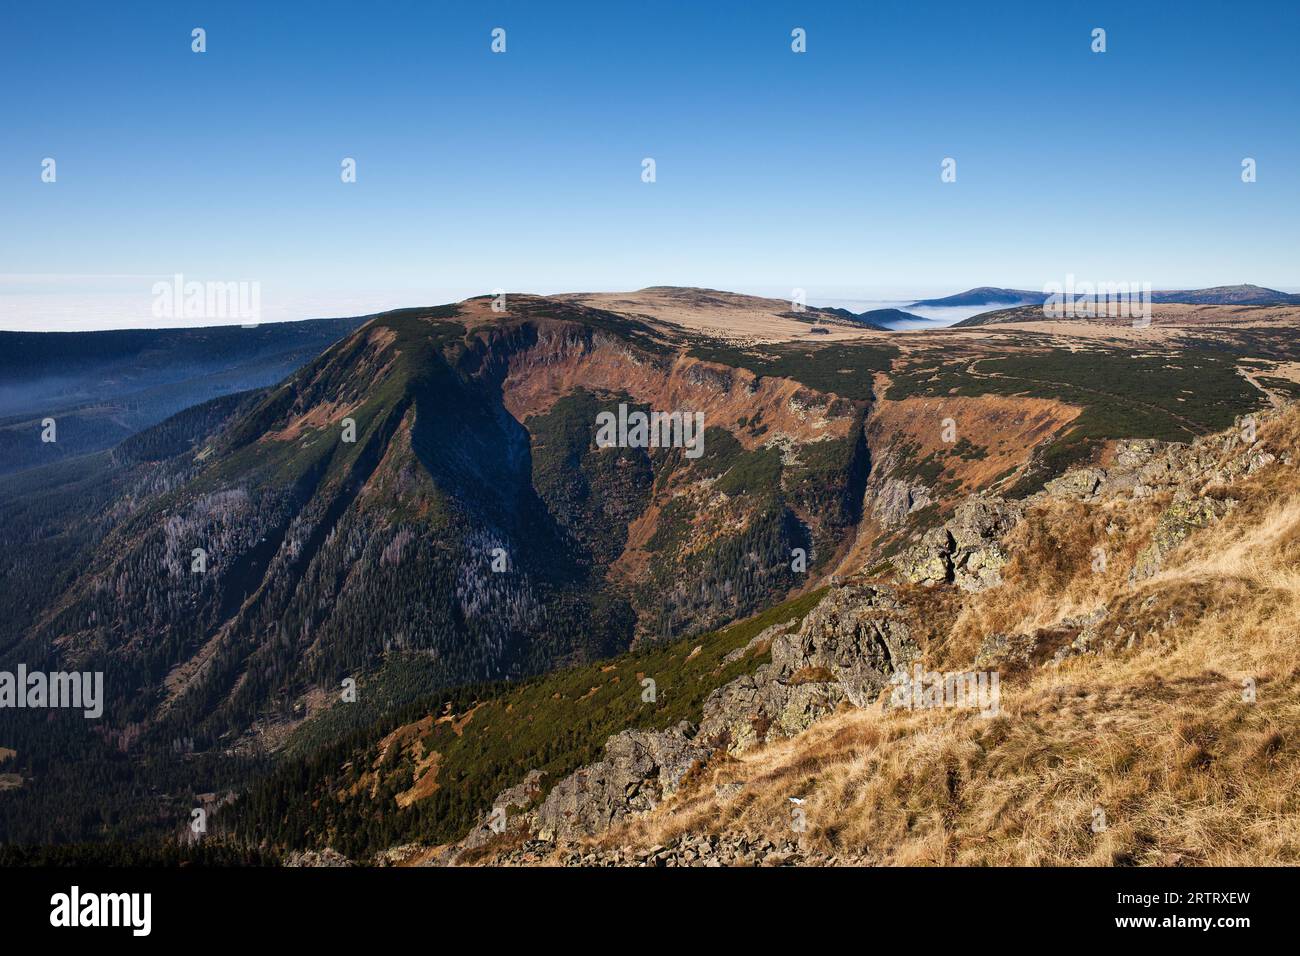 Poland and Czech Republic border, Karkonosze Mountains landscape, view from the Sniezka Mountain Stock Photo